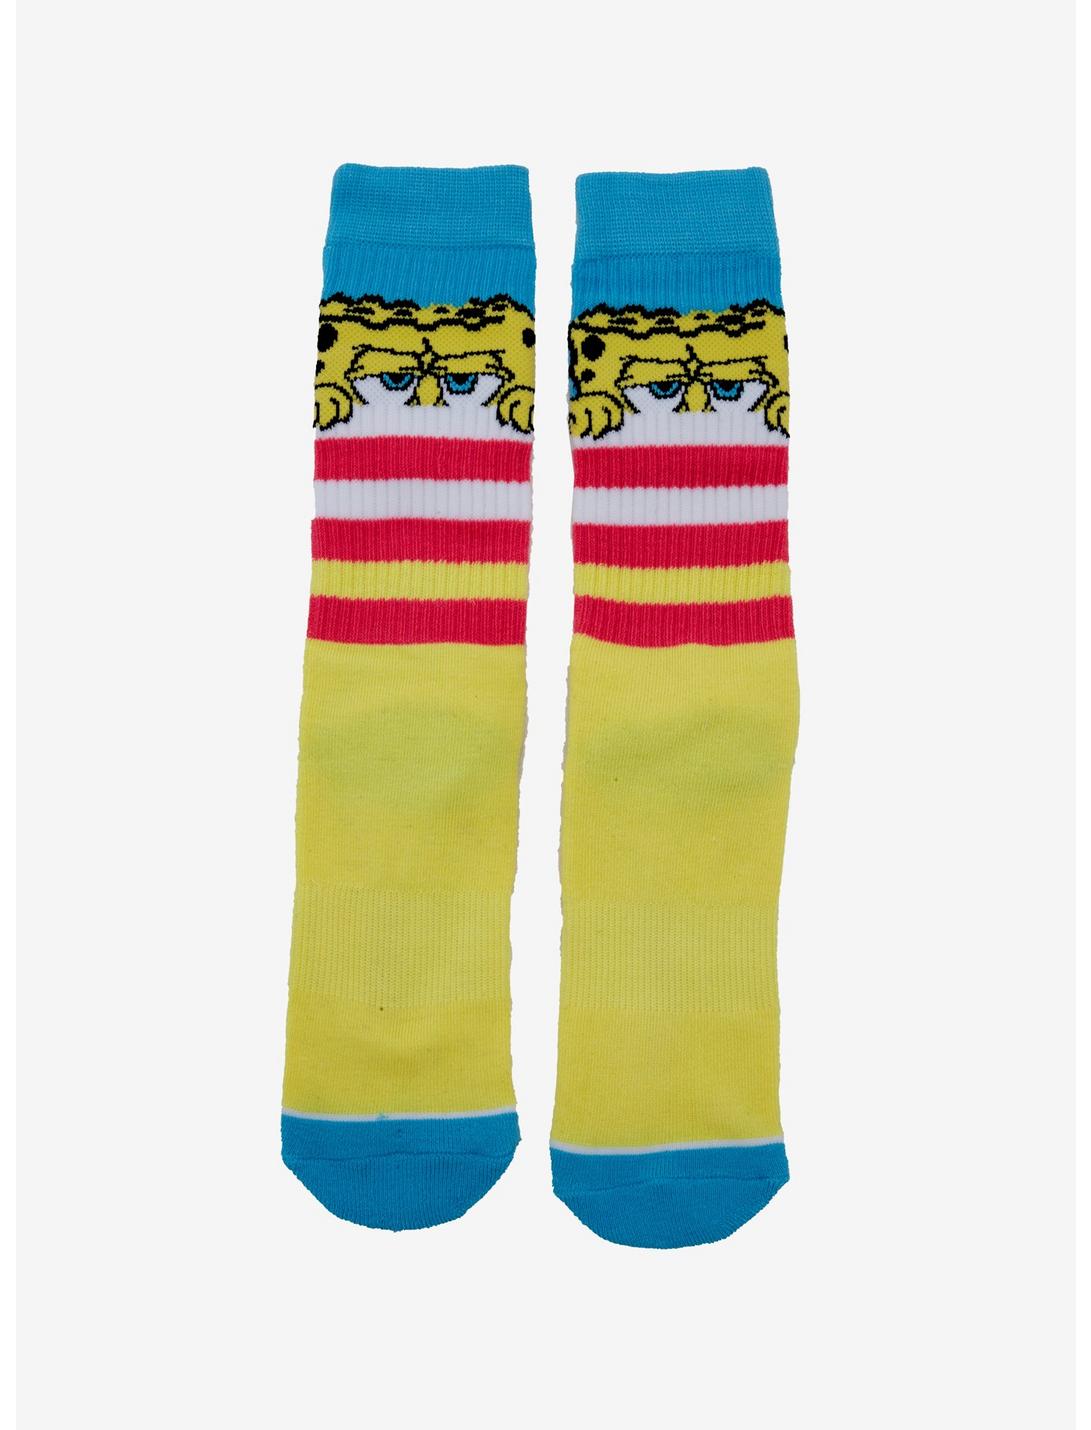 SpongeBob SquarePants Striped Crew Socks, , hi-res